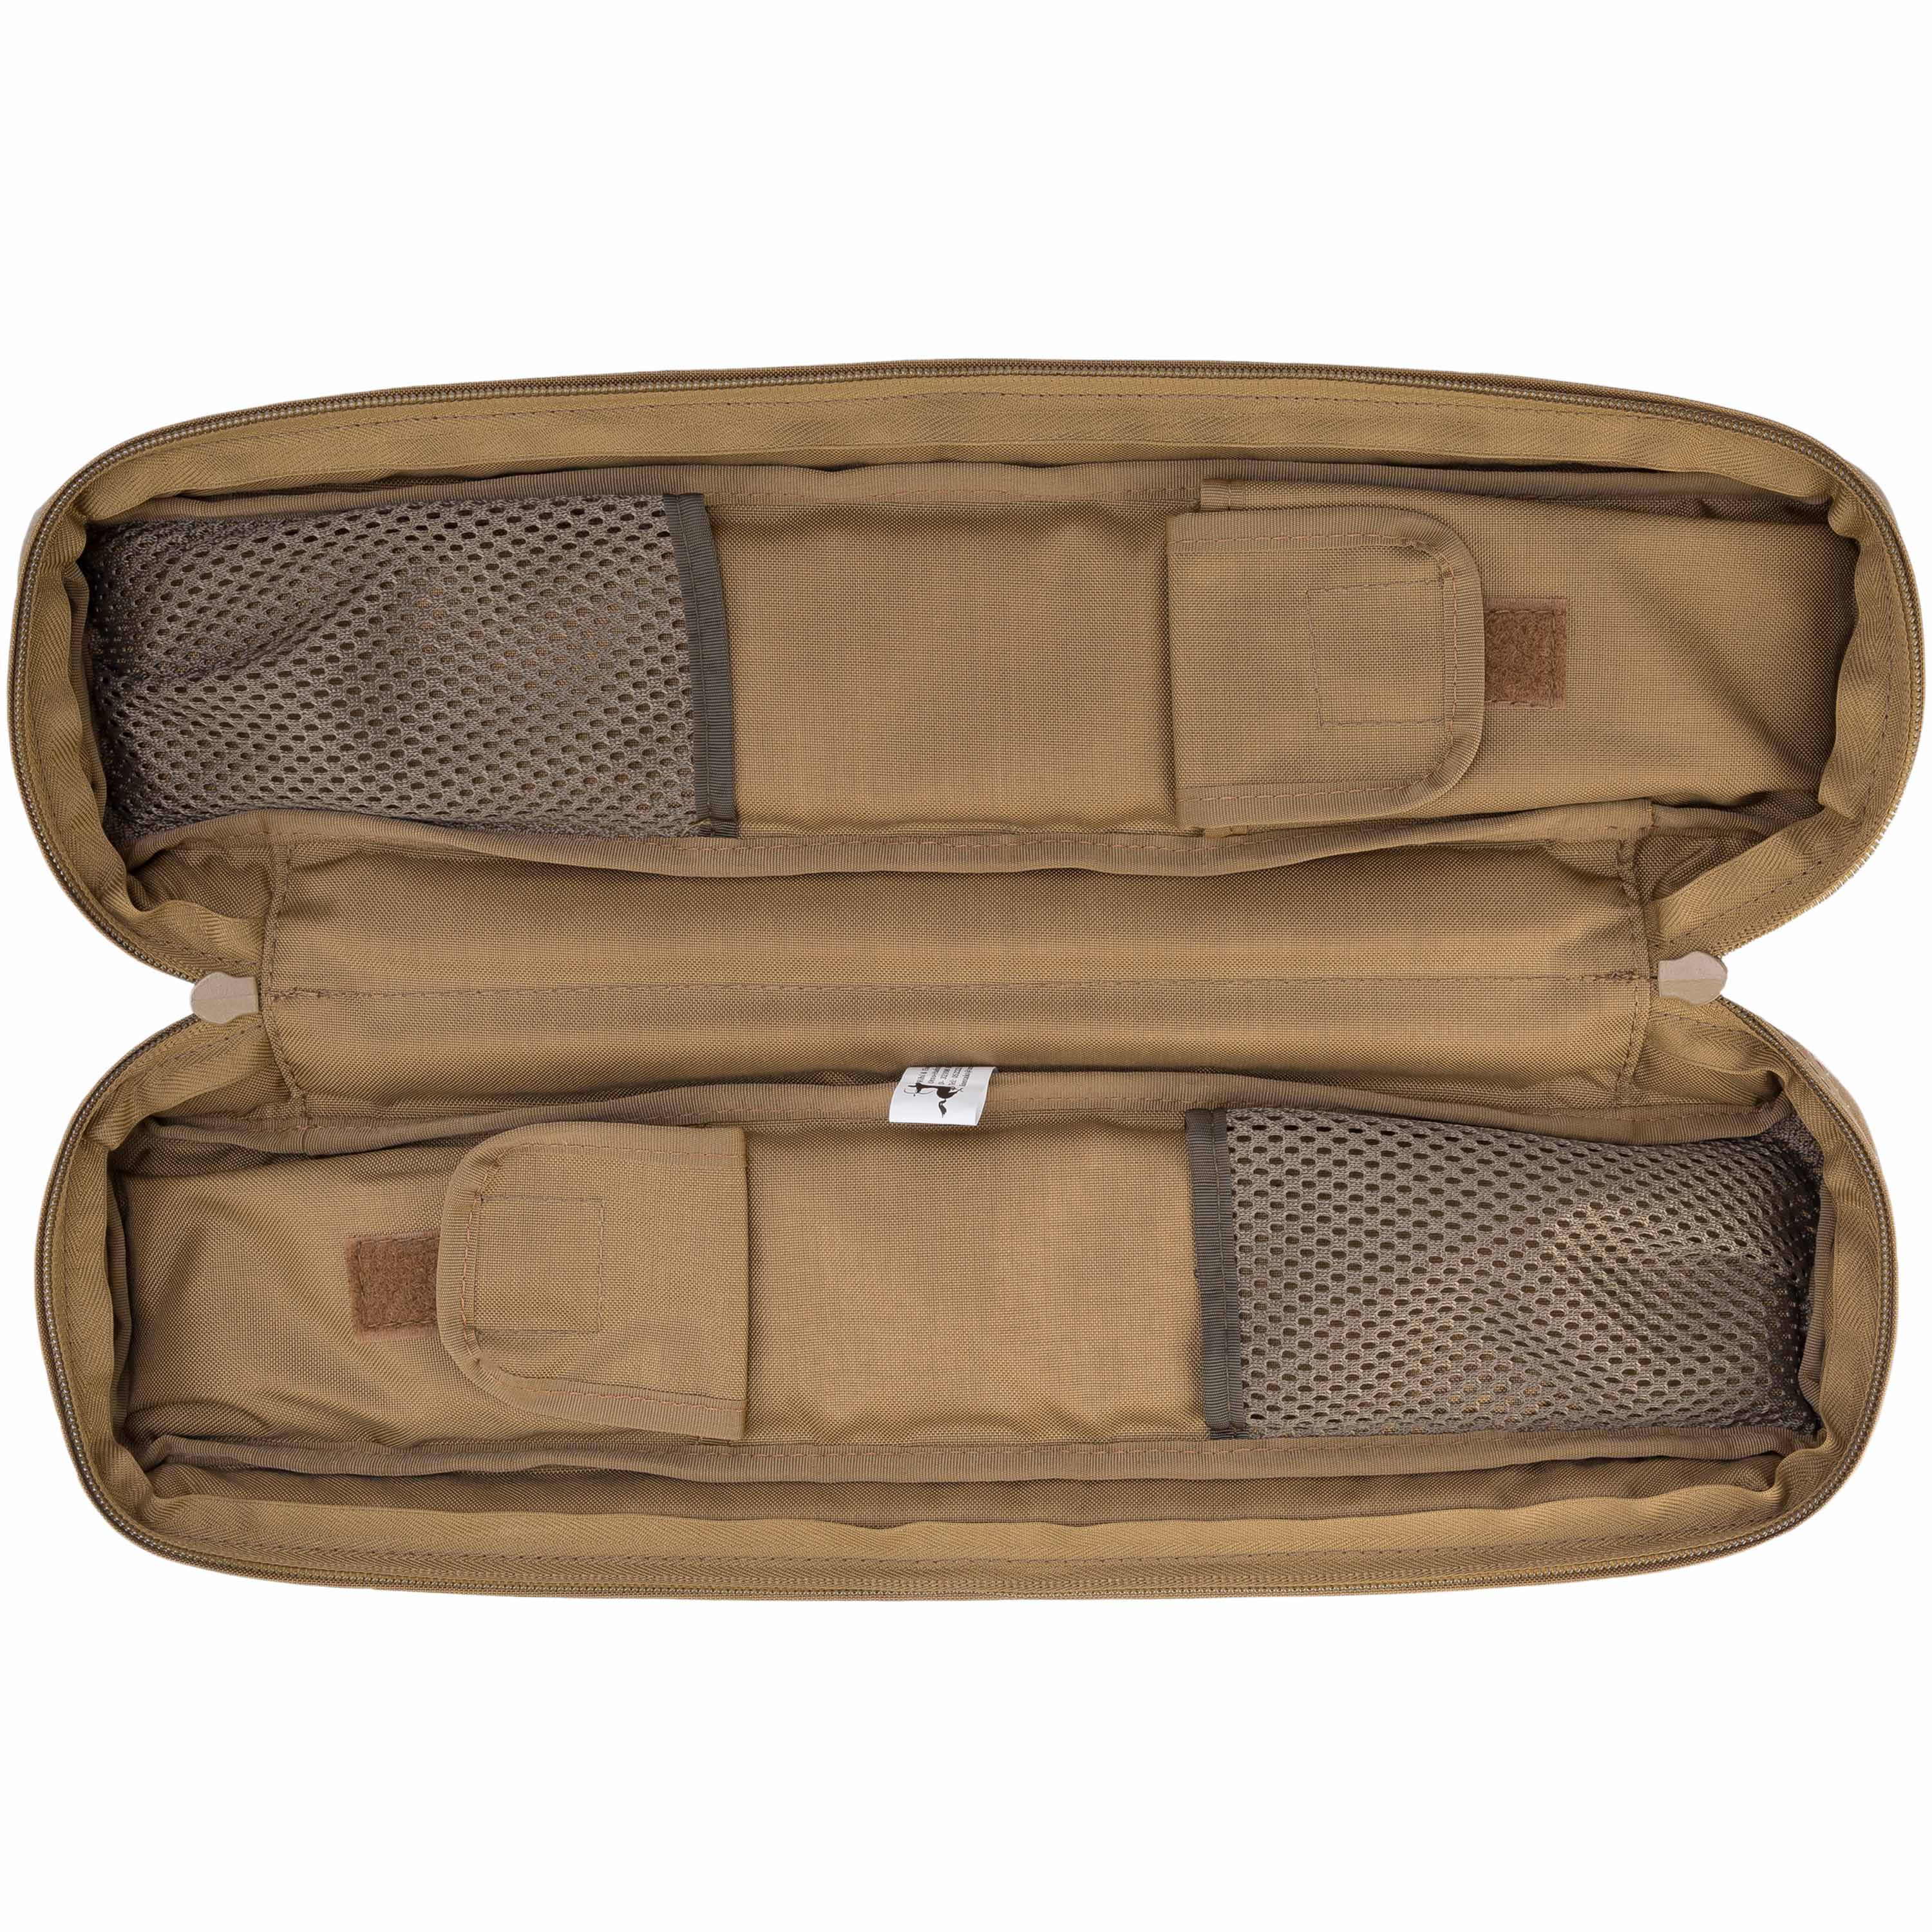 Zentauron Rifle Scope Bag 45 cm coyote